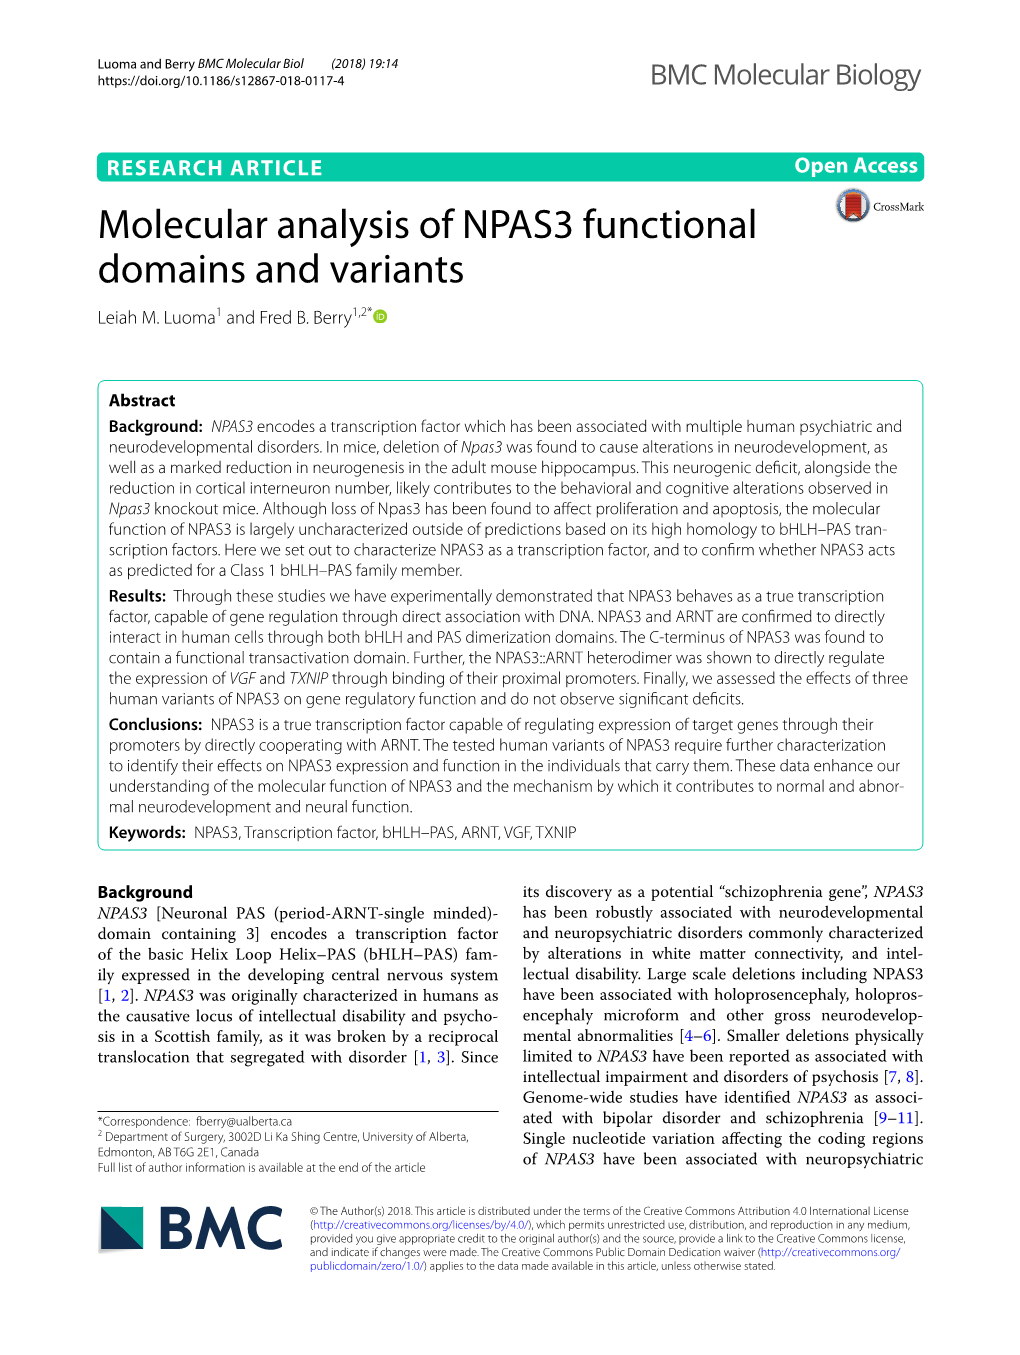 Molecular Analysis of NPAS3 Functional Domains and Variants Leiah M